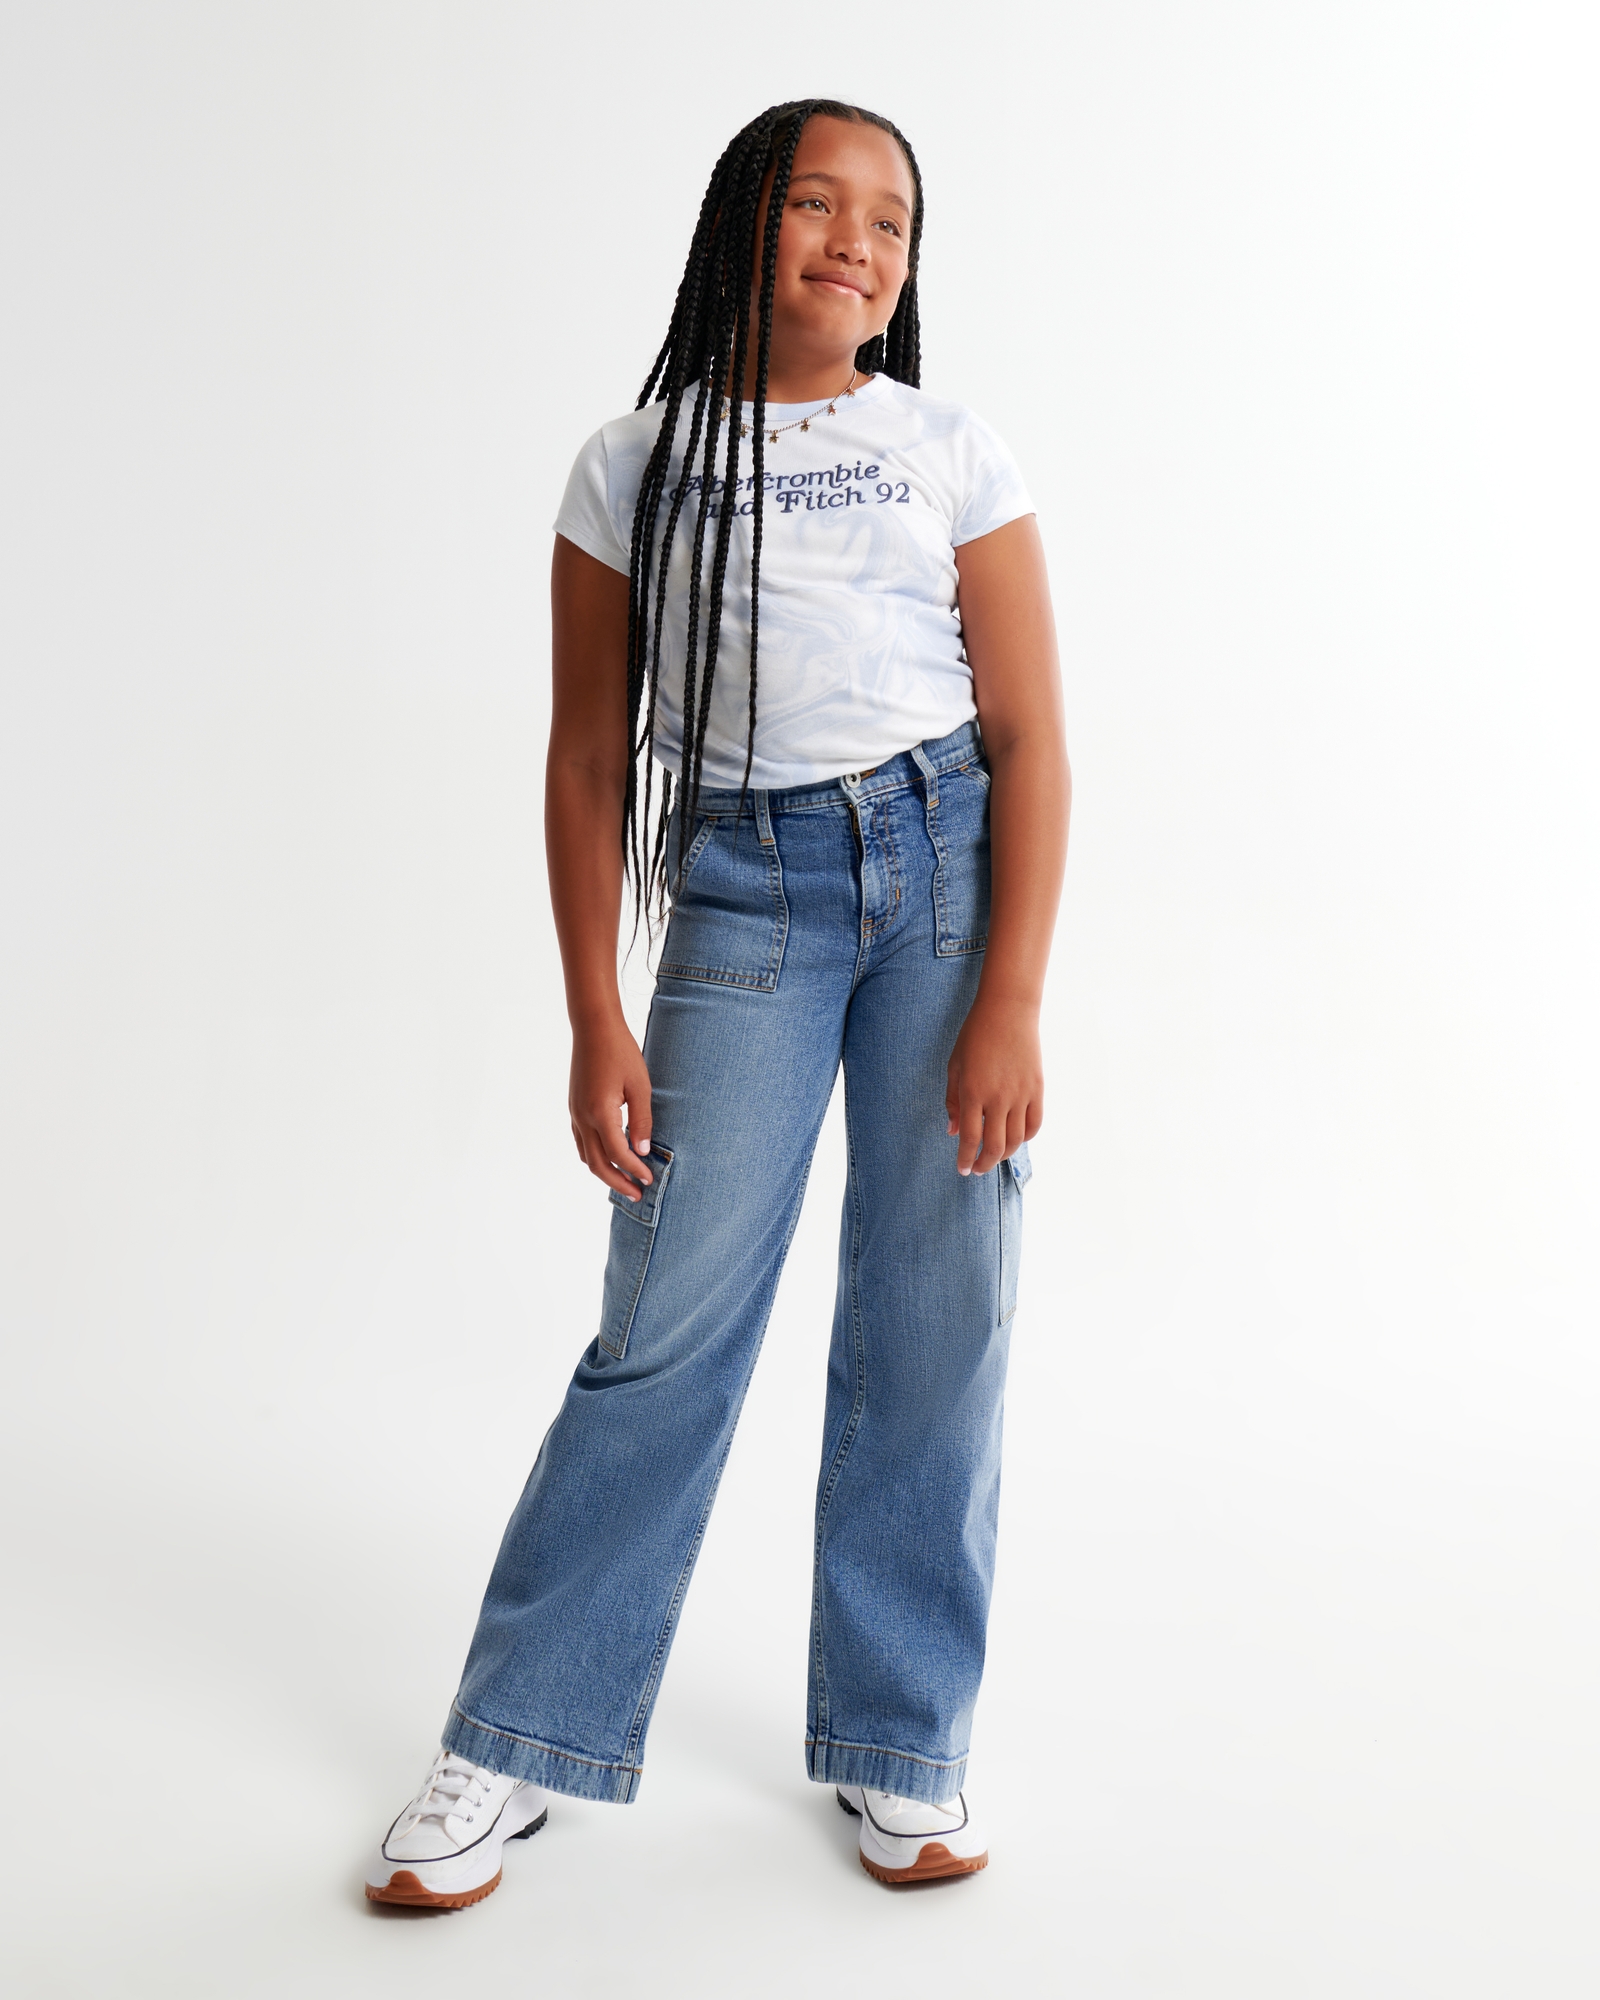 Teen Girls High Rise Wide Leg Flare Jeans